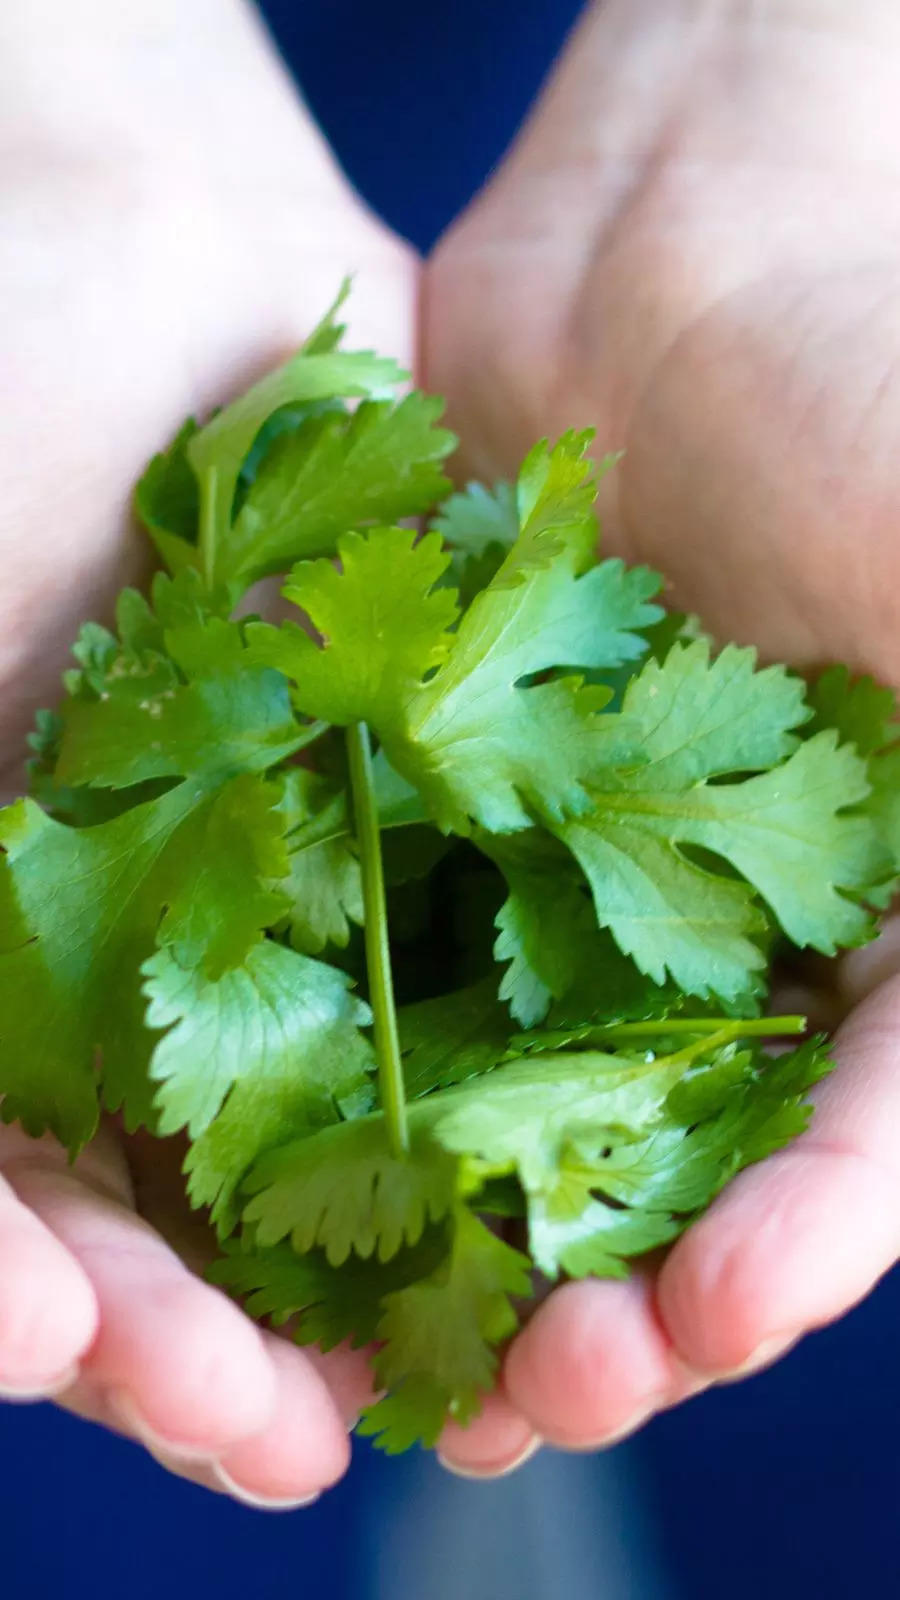 Surprising benefits of coriander leaves